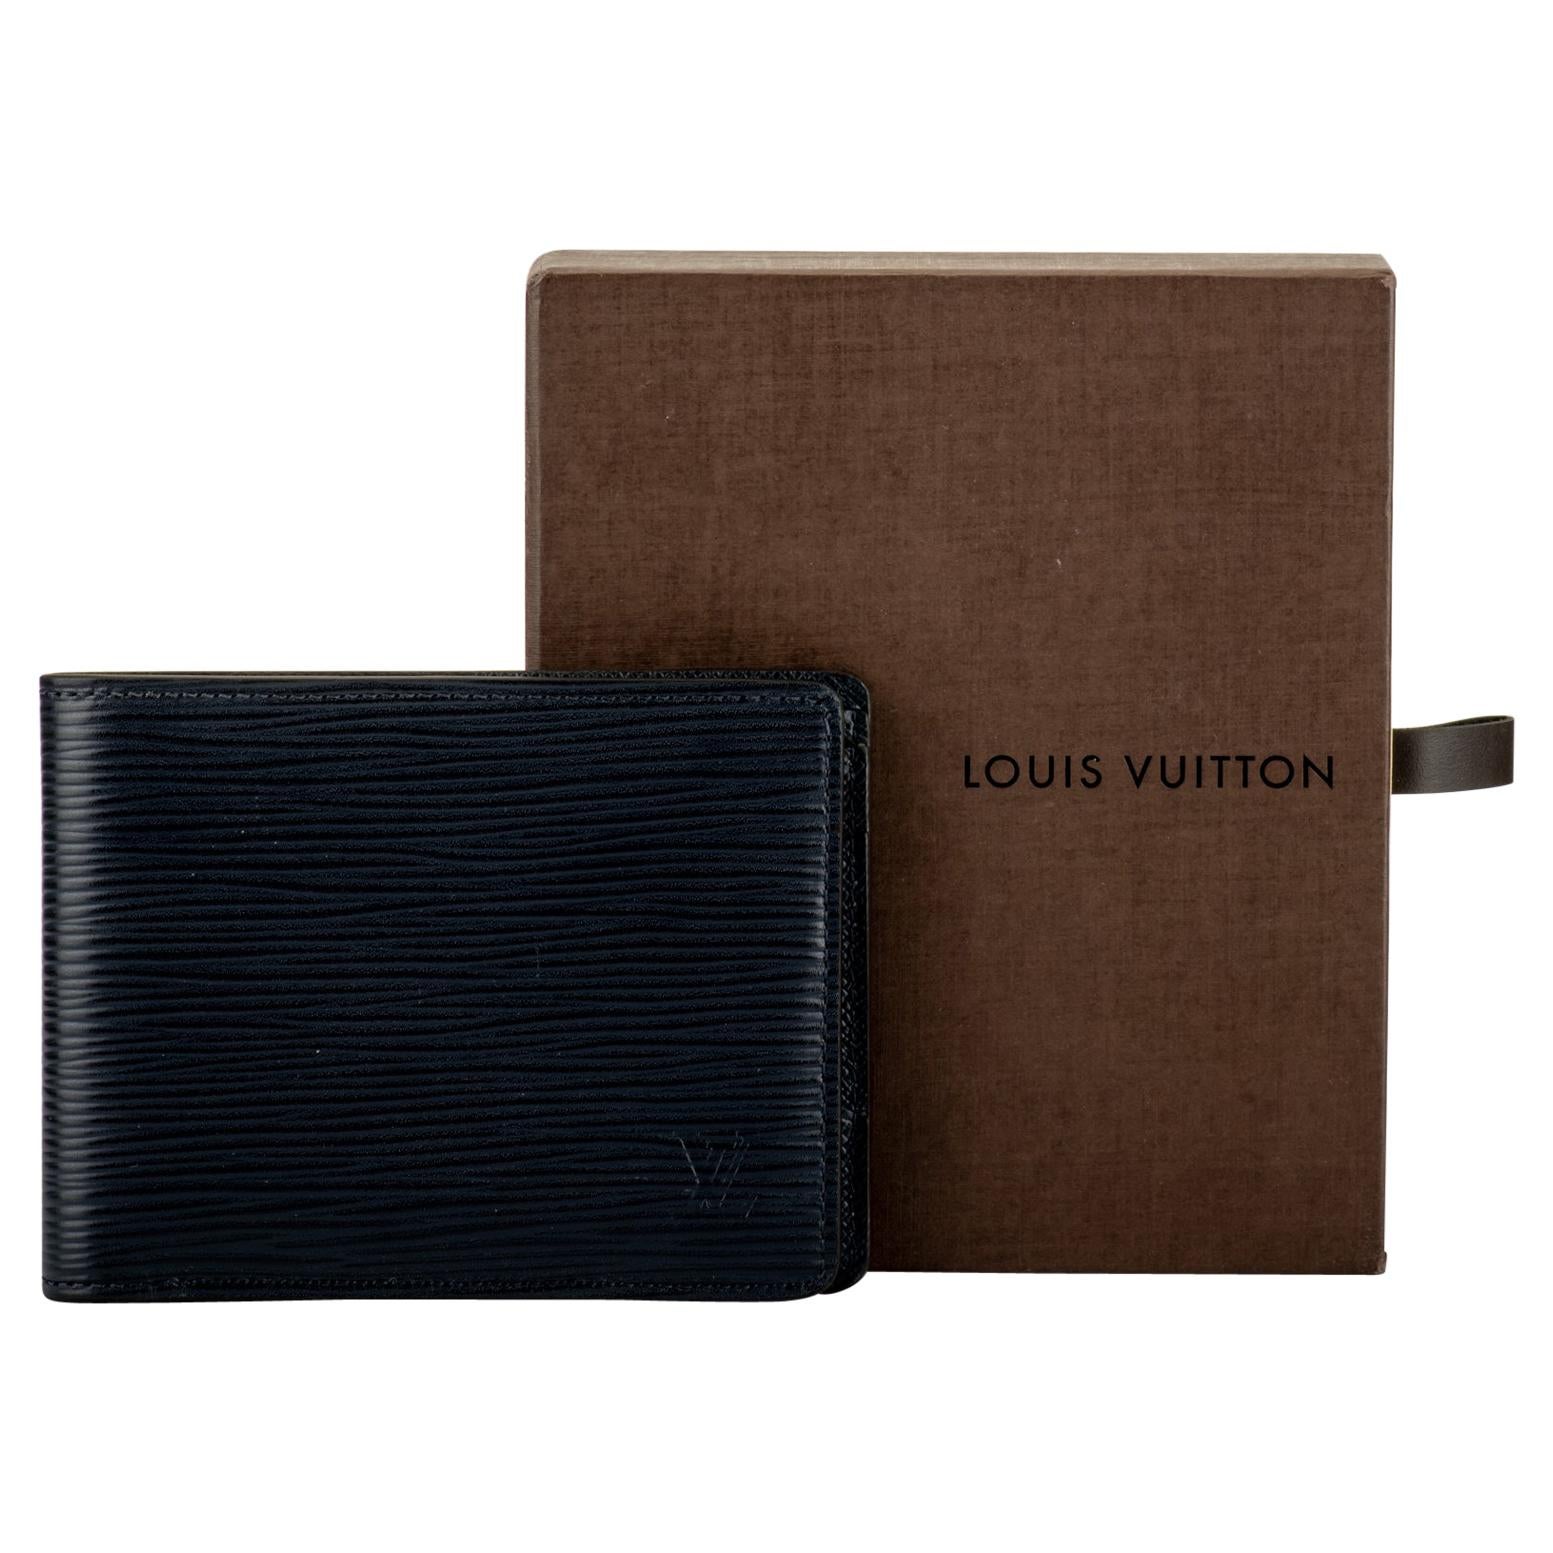 Louis Vuitton Blue Epi Wallet with Box